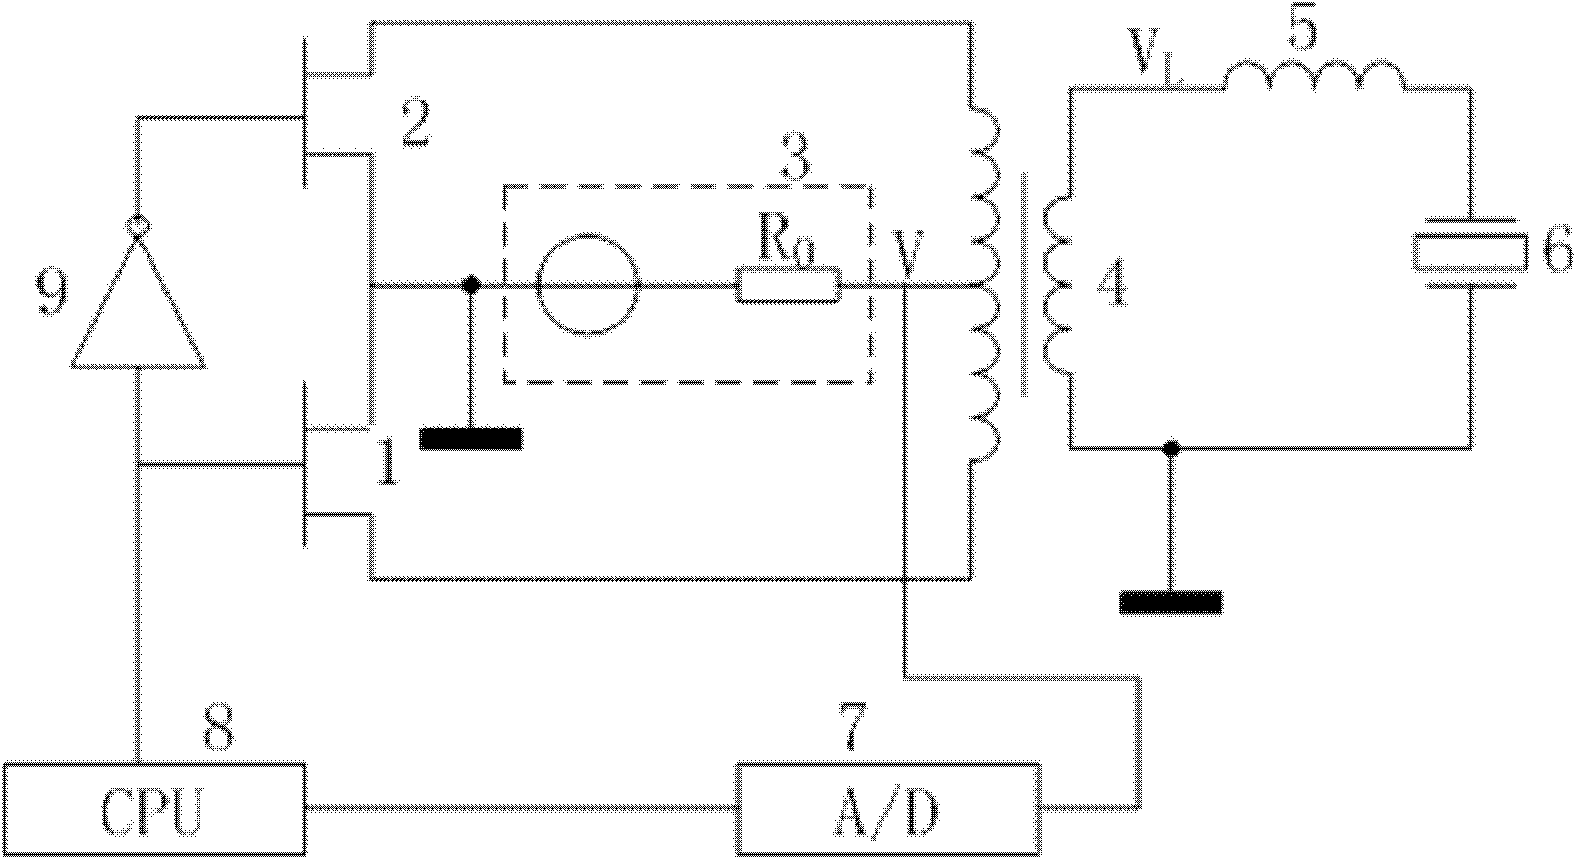 A tuning method for ultrasonic handle in phacoemulsification apparatus